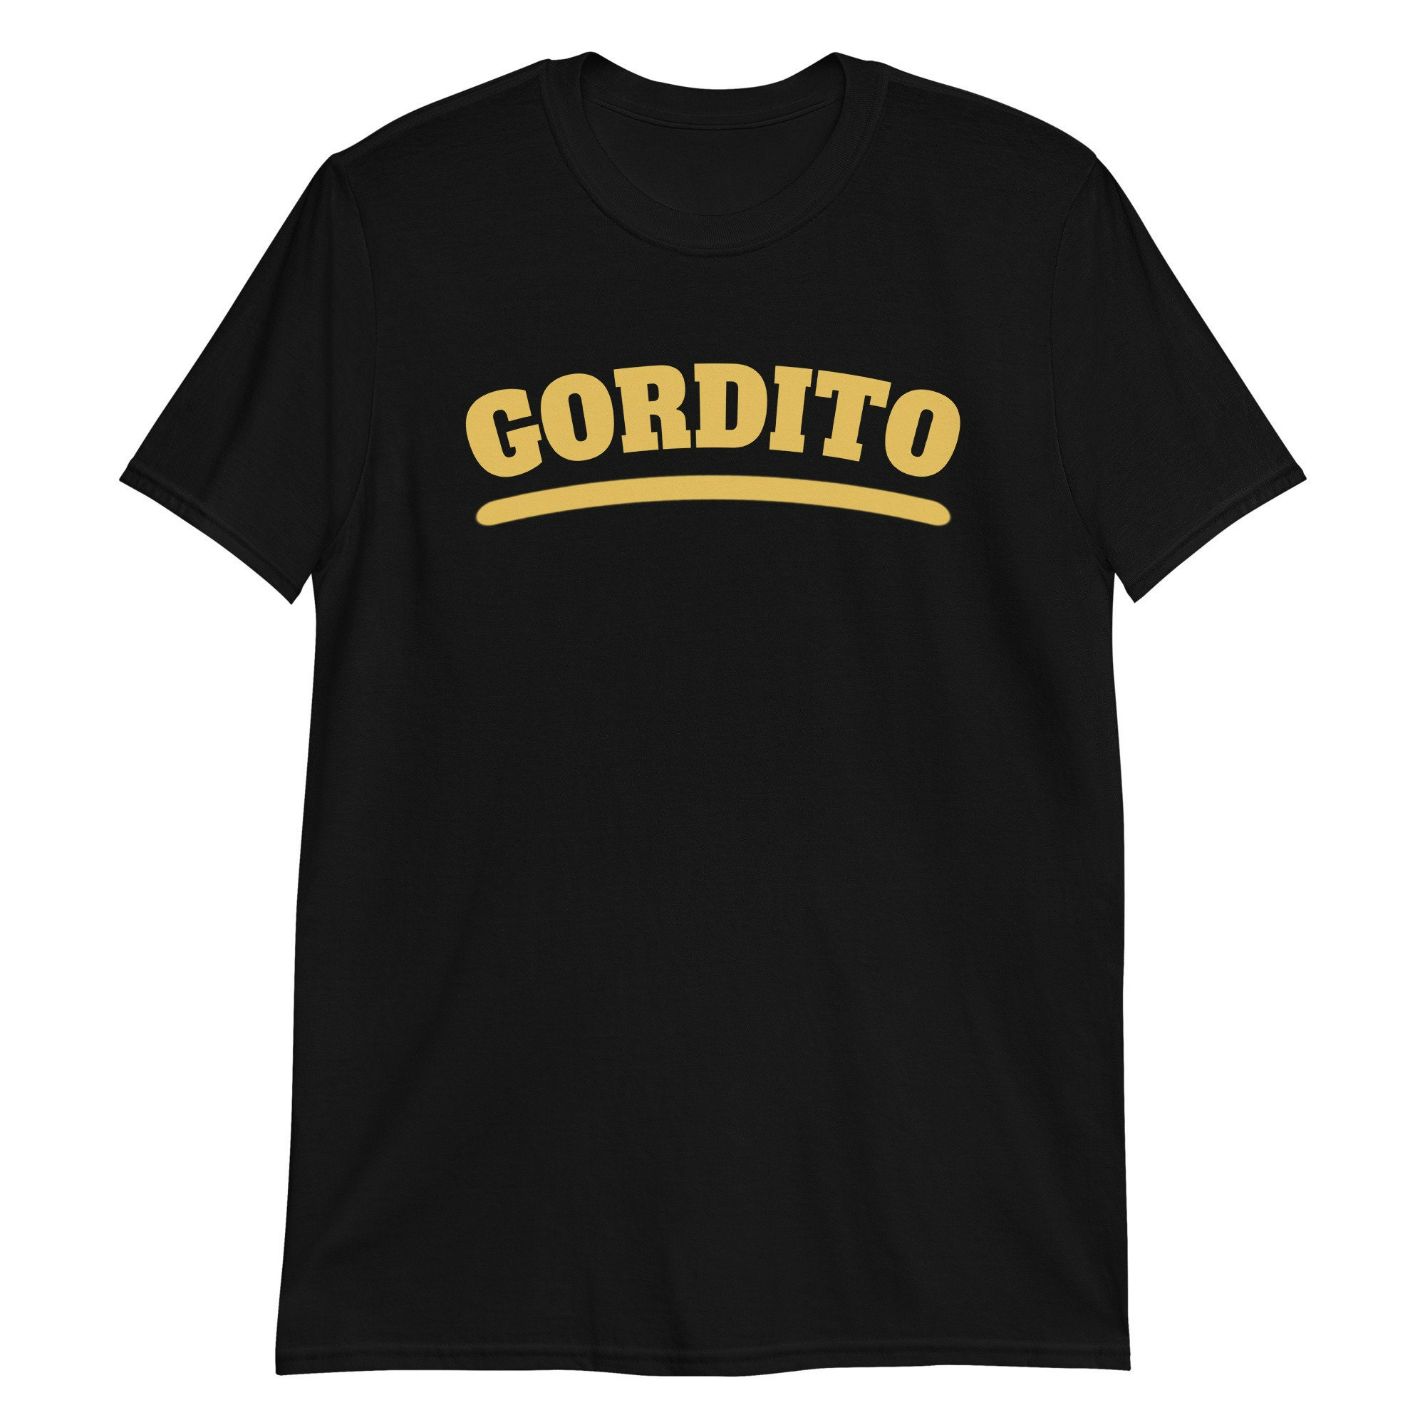 Gordito Funny Spanish Slang For Chubby T-Shirt